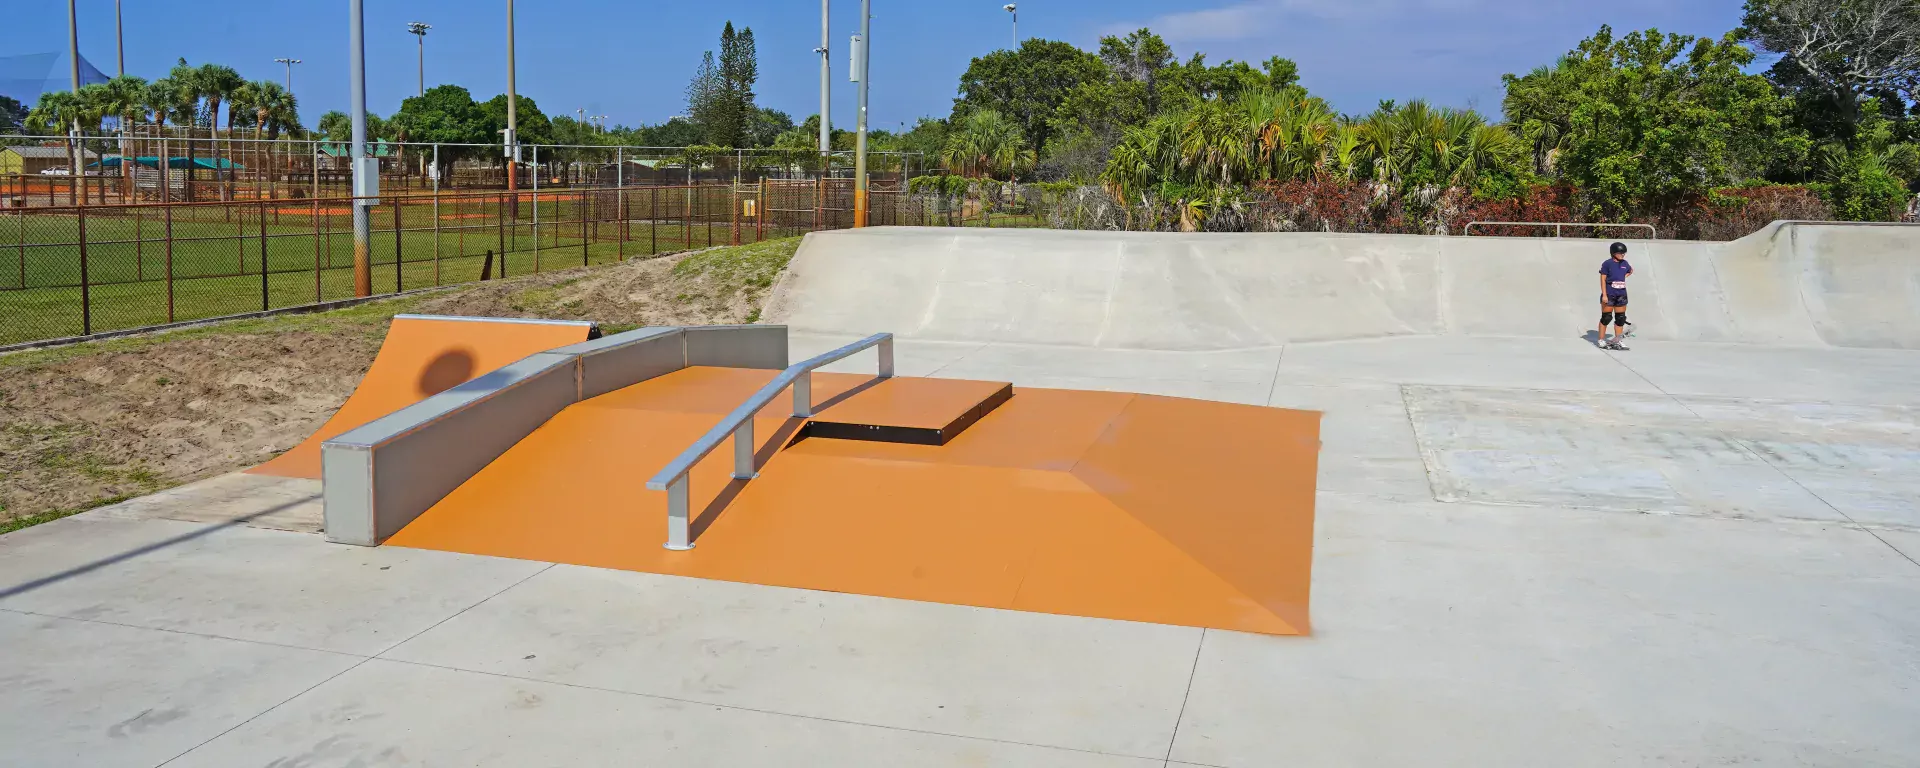 Rio Skate Park Feature